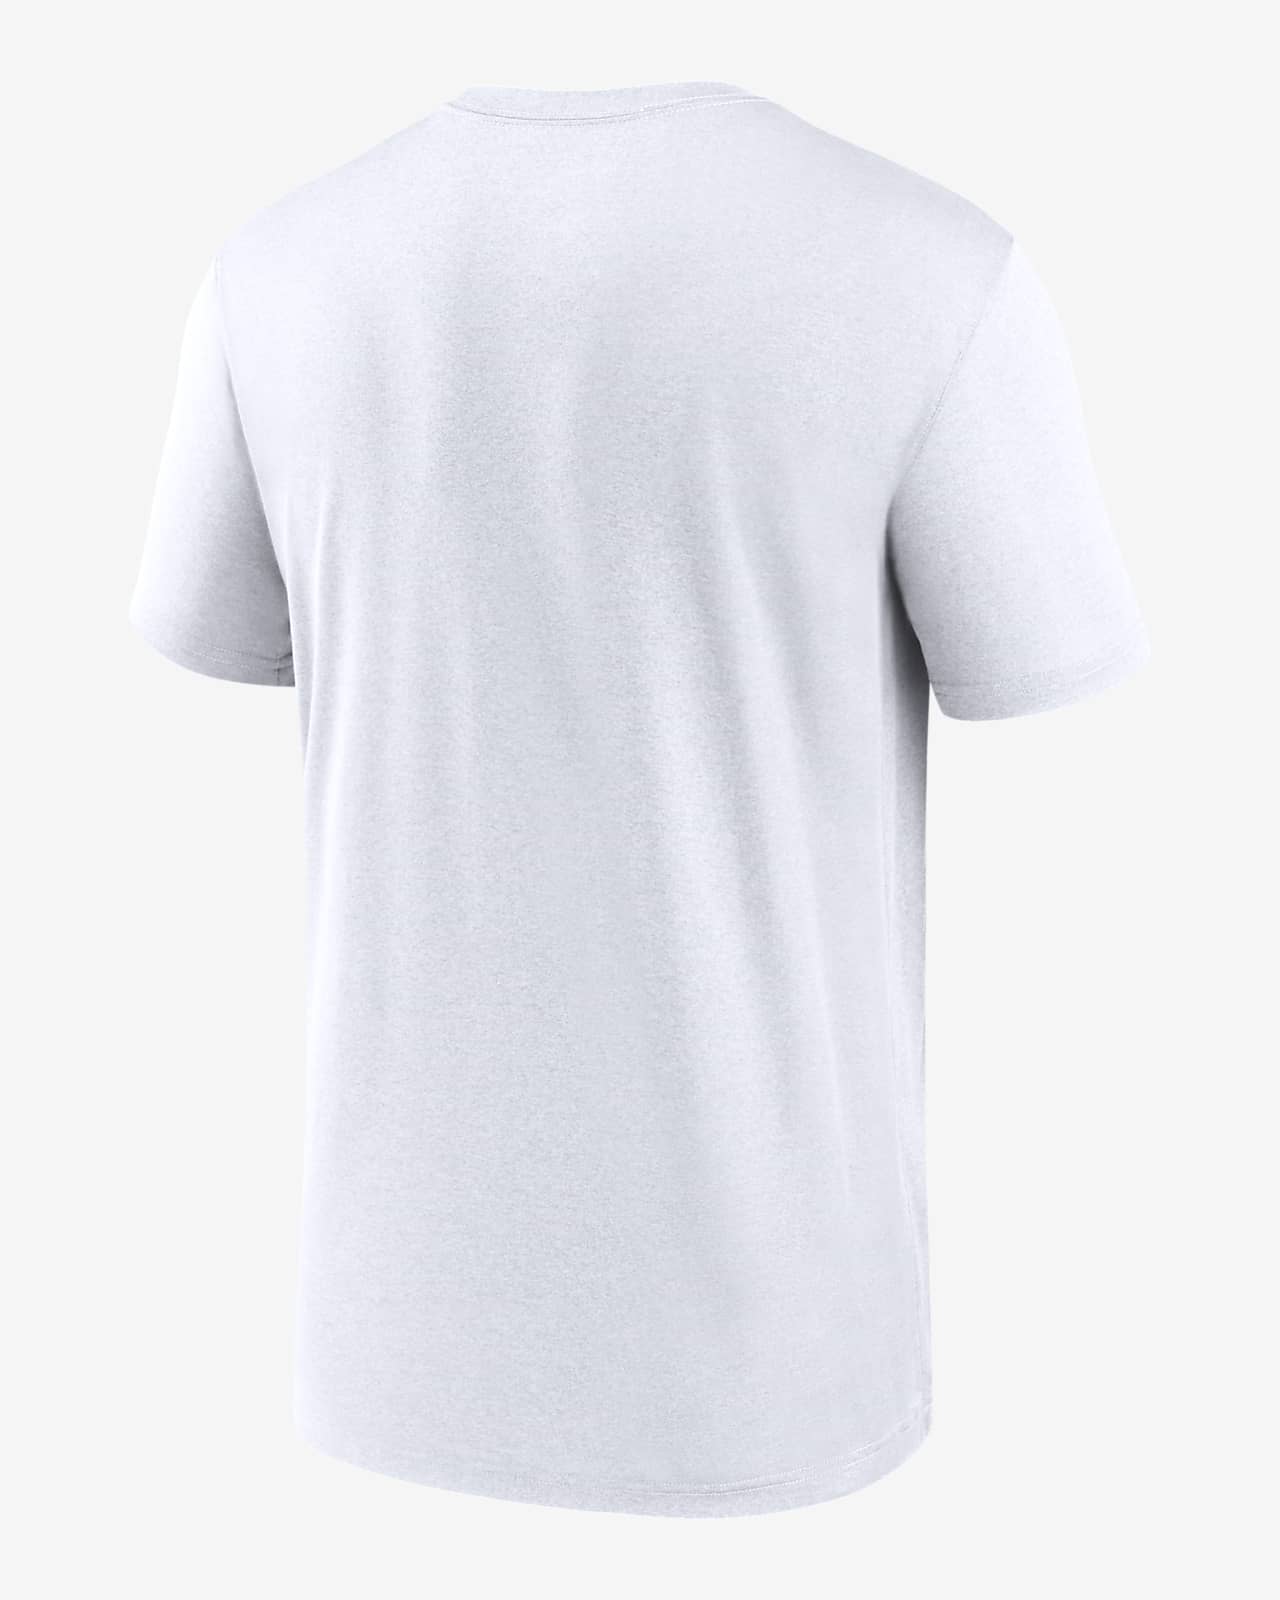 Nike Dri-FIT Icon Legend (NFL New York Jets) Men's T-Shirt.